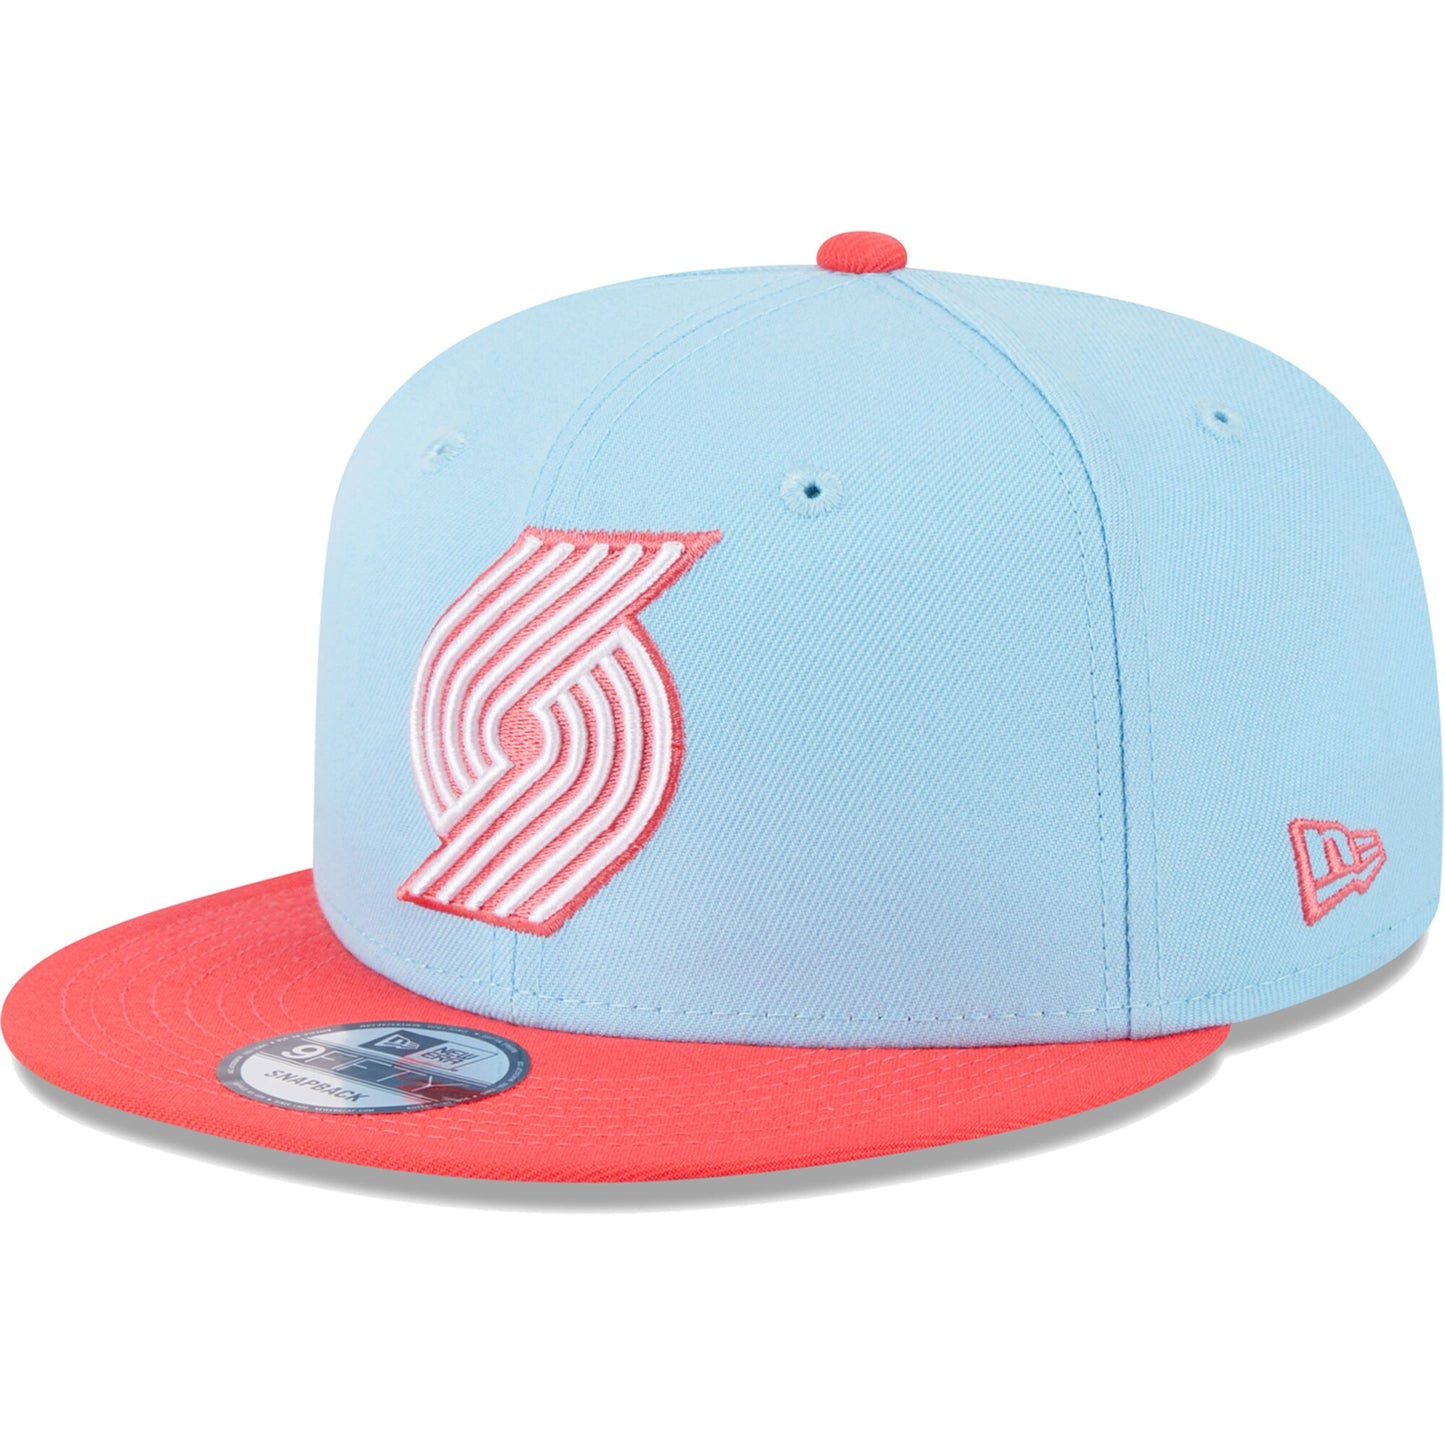 Portland Trail Blazers New Era 2-Tone Color Pack 9FIFTY Snapback Hat - Powder Blue/Red